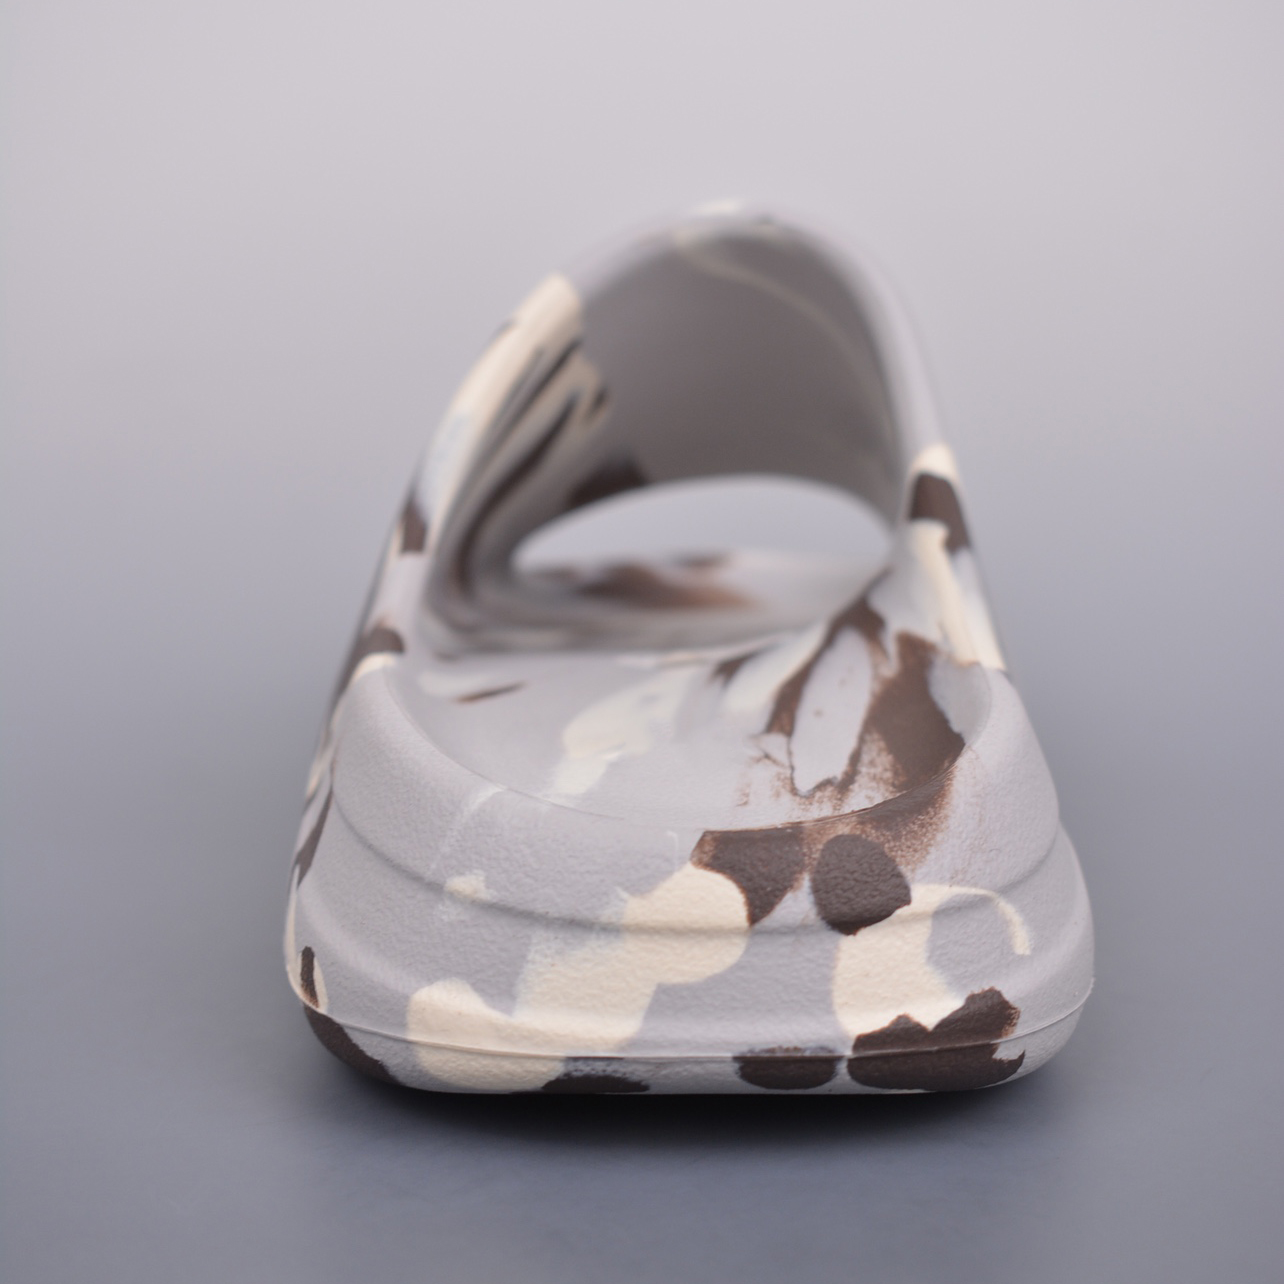 Designer Silde pantoufles Summer Hole Chaussures Tongs Desert Sand Hommes femmes carbone Suie pur Sandales 36-48